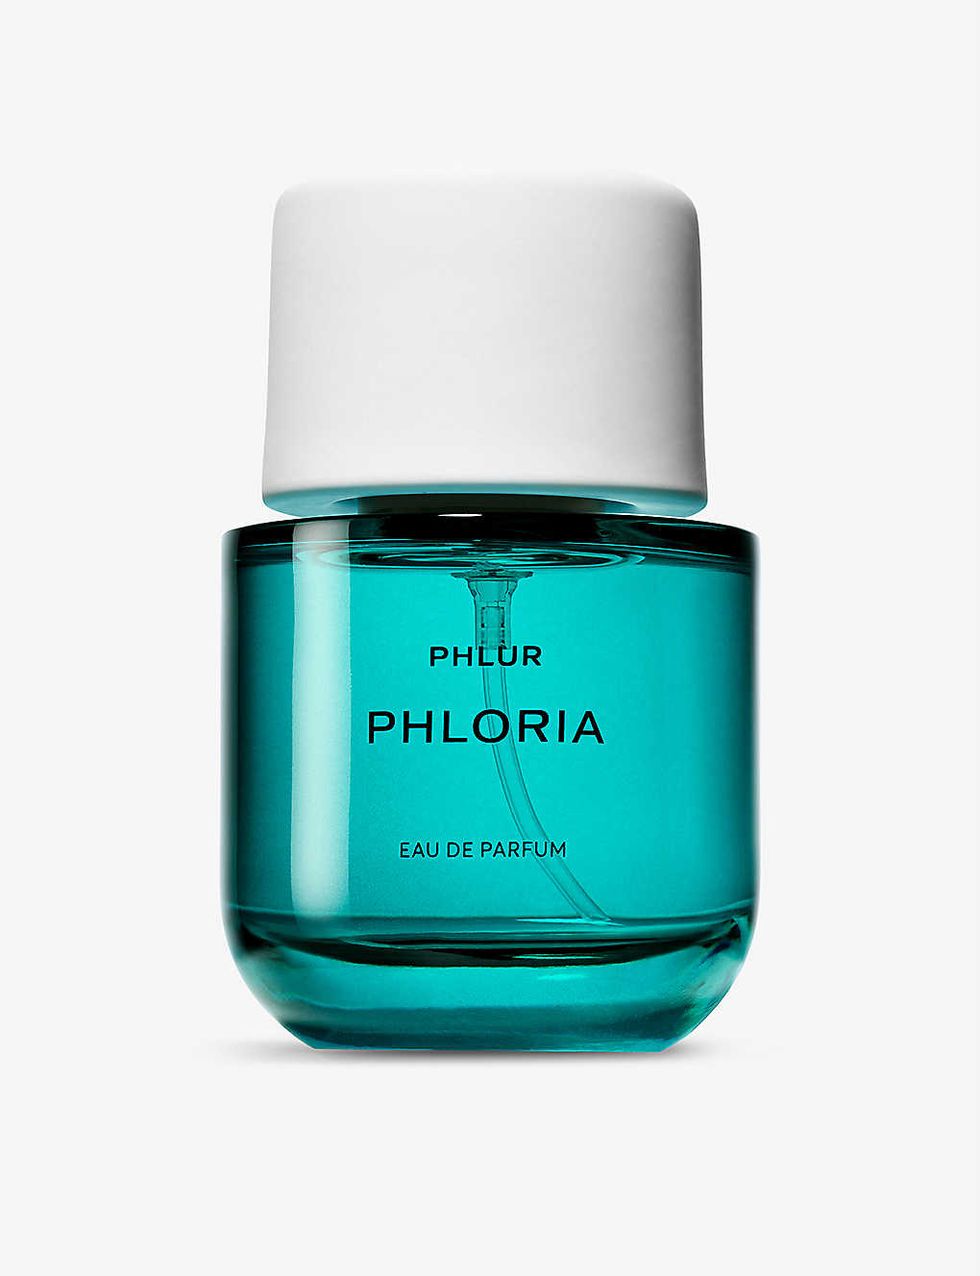 Phloria eau de parfum 50ml